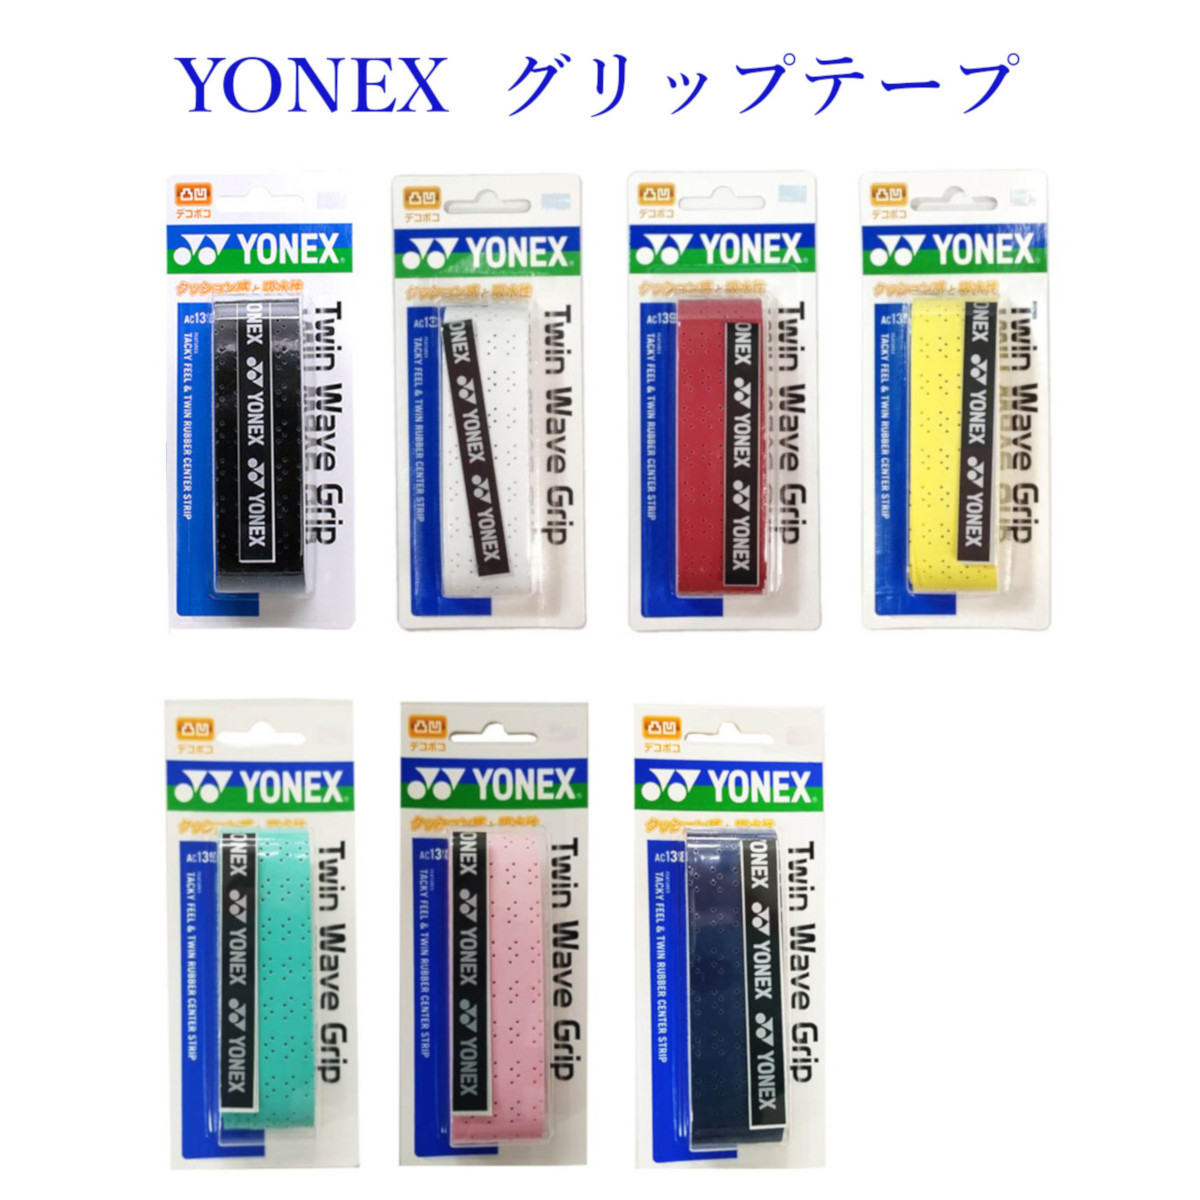 YONEX グリップテープ ヨネックス ツインウエーブグリップ AC139 2019AW バドミントン テニス ソフトテニス ゆうパケット(メール便)対応